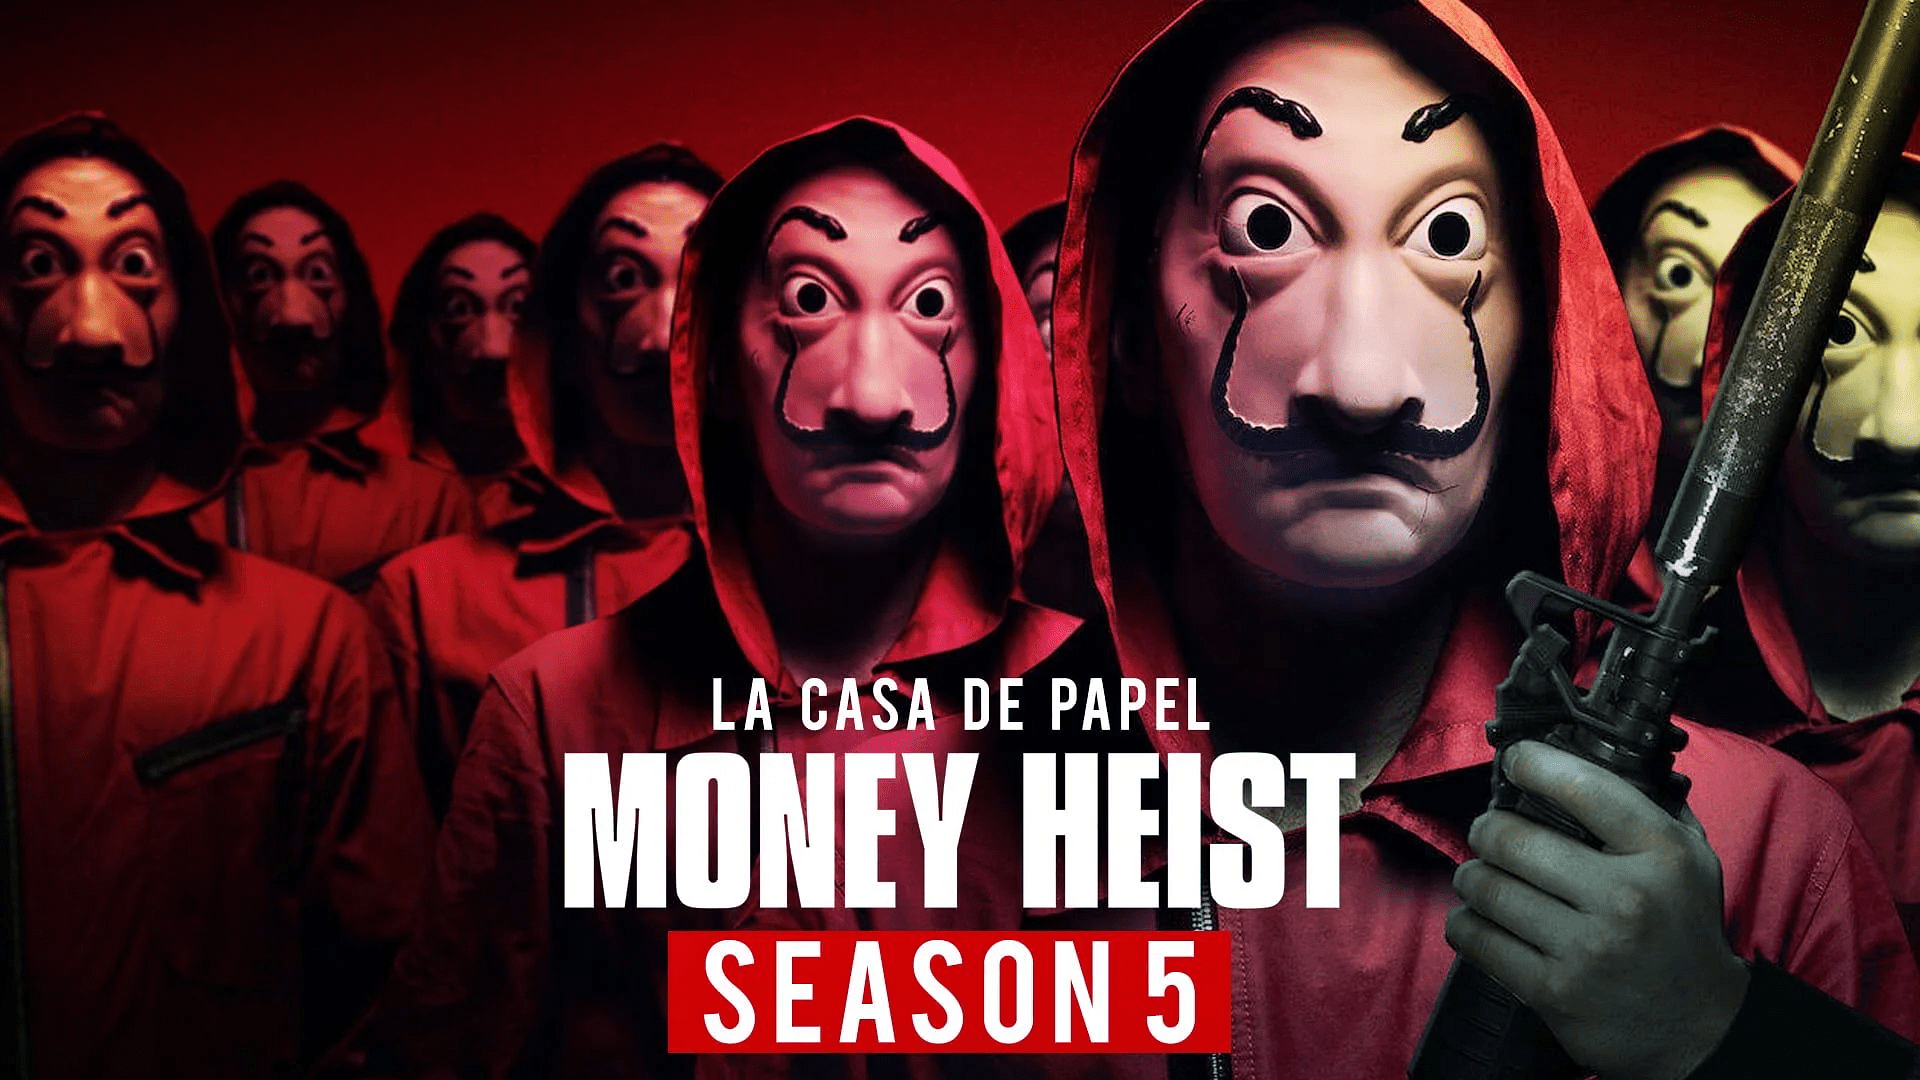 5 part 2 heist money season streaming Money Heist